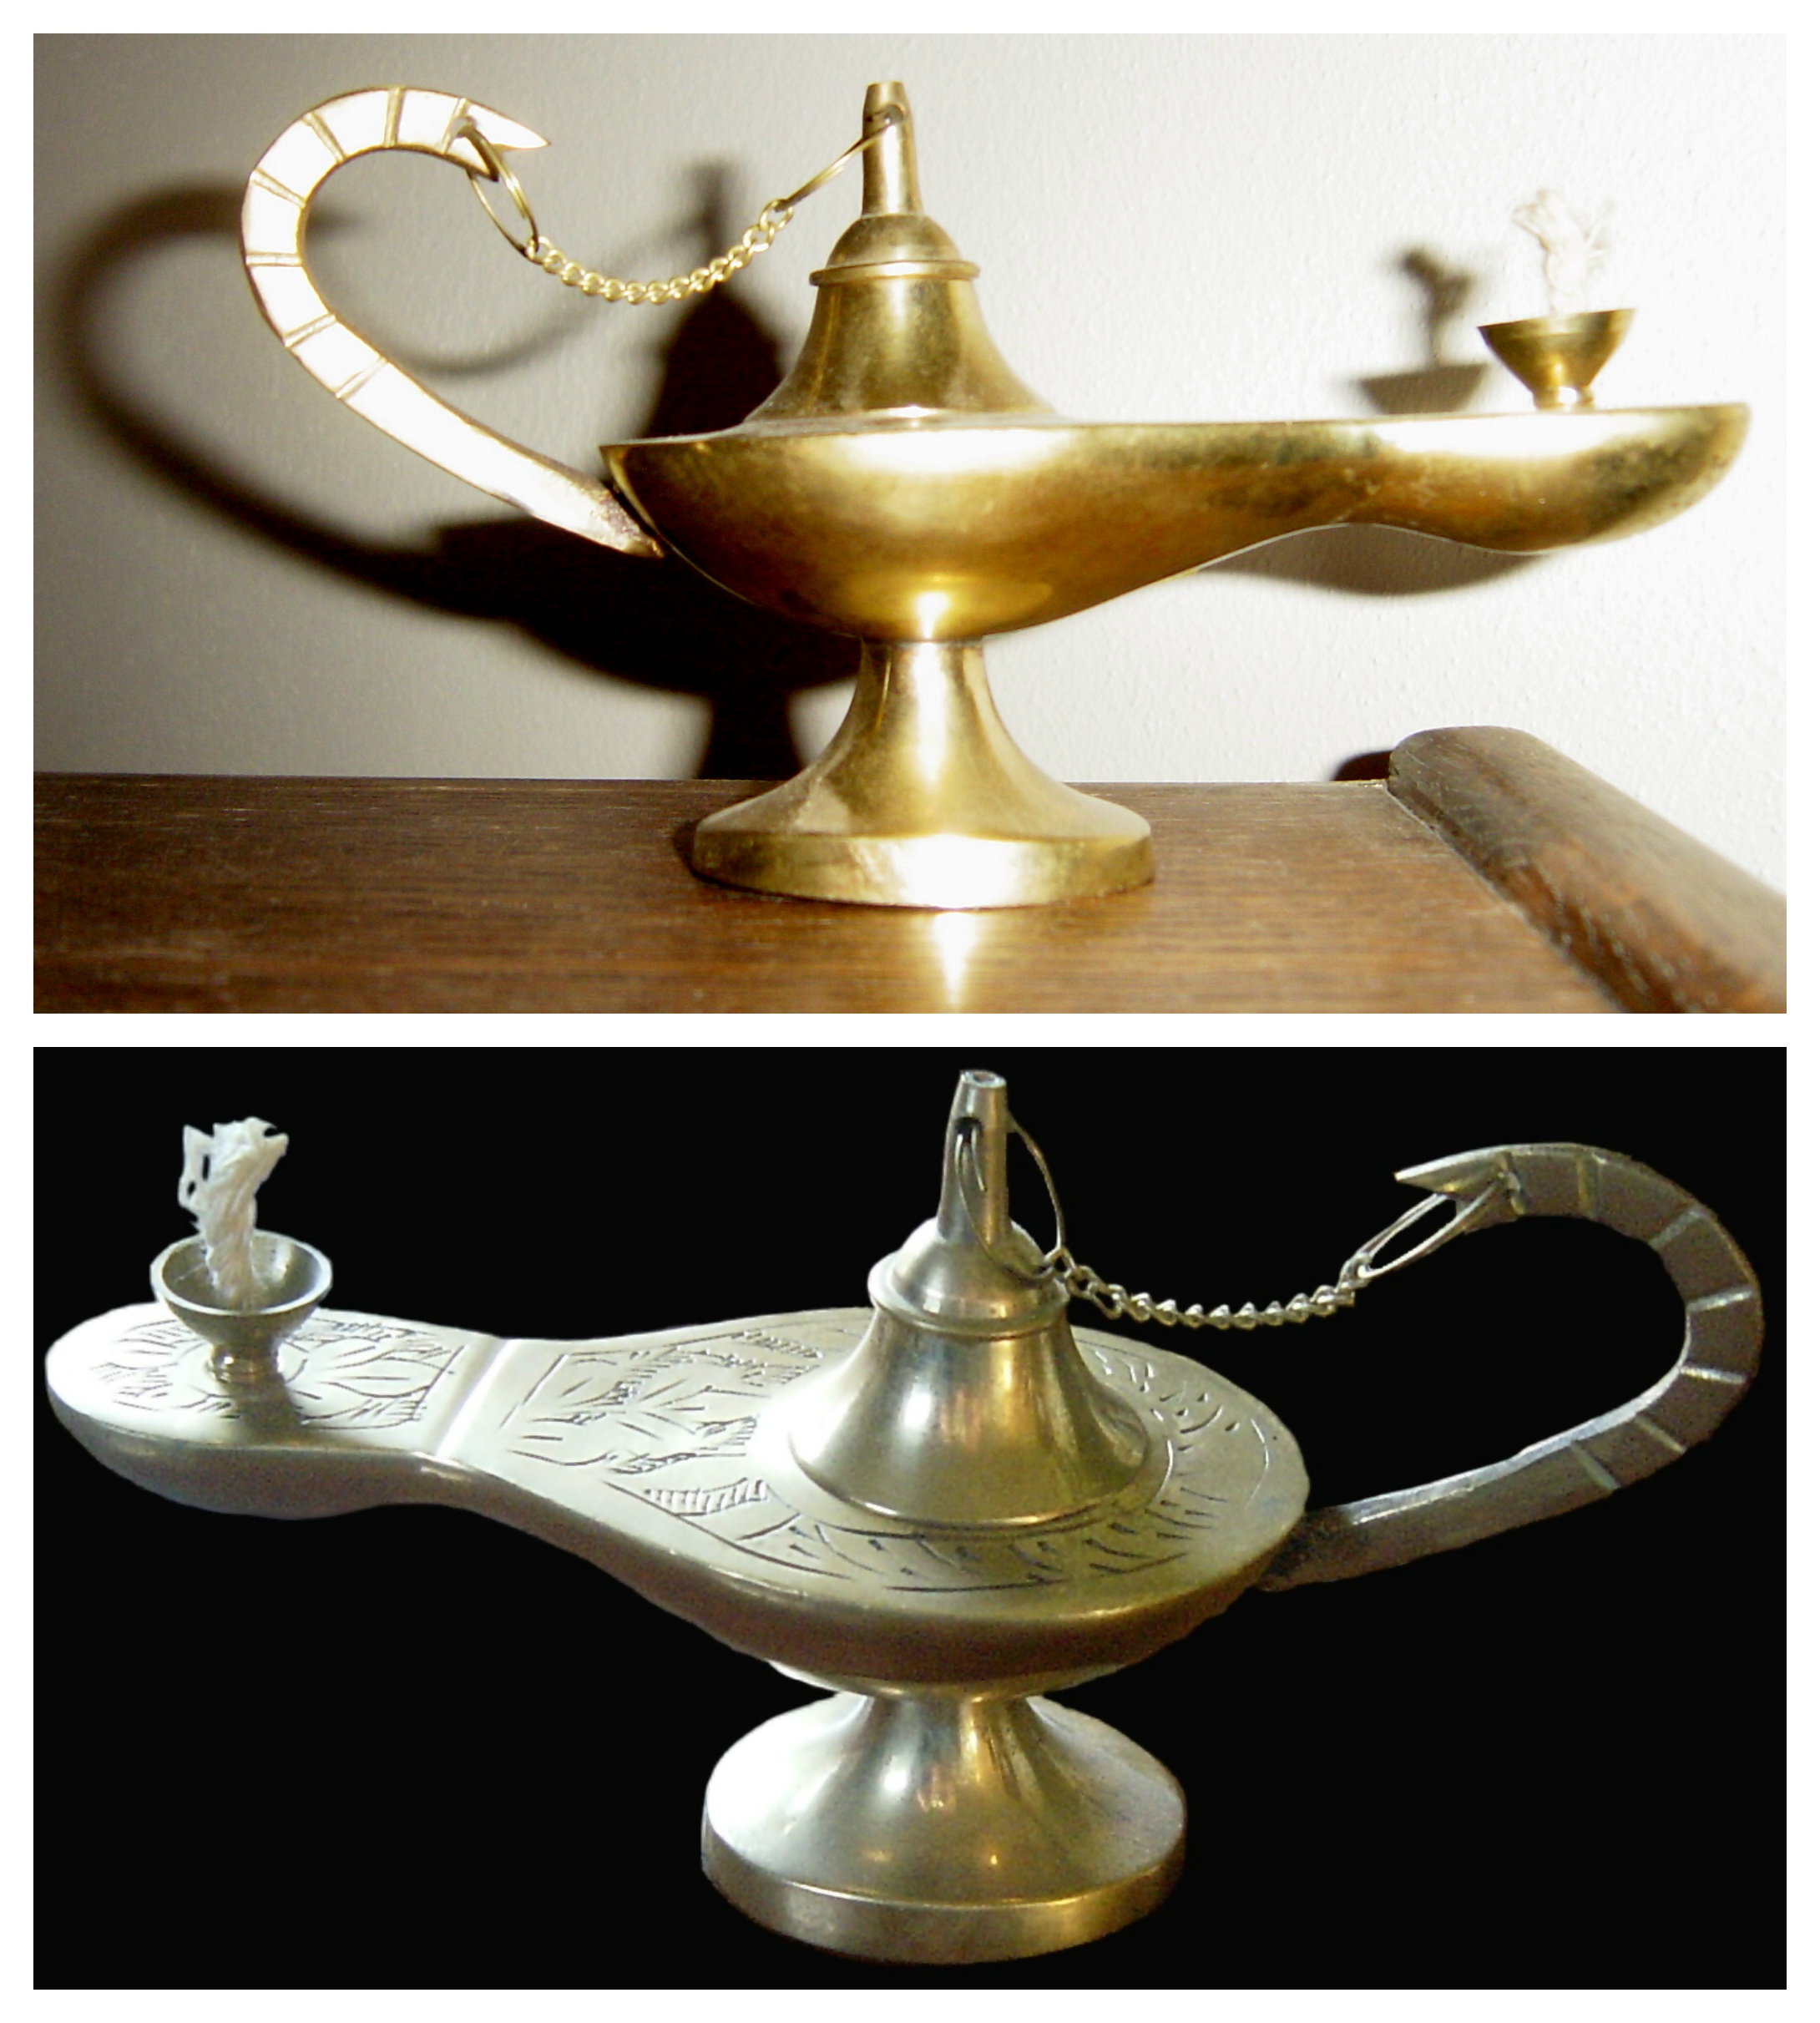 Magic Genie Brass Oil Lamp by FantasyStock on DeviantArt